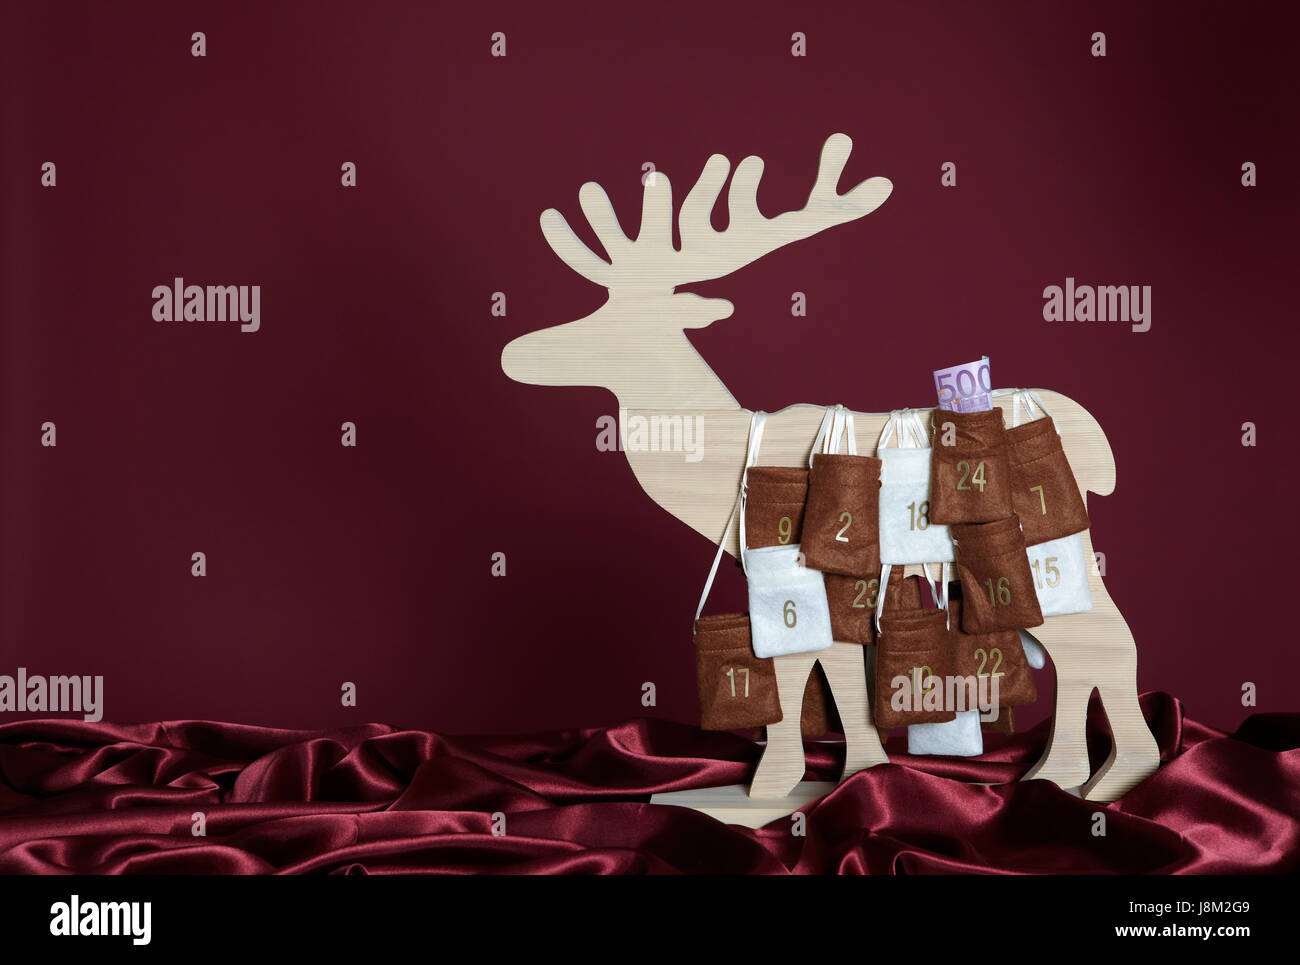 wood, bank note, elk, reindeer, satin, advent calendar, money, calender, Stock Photo